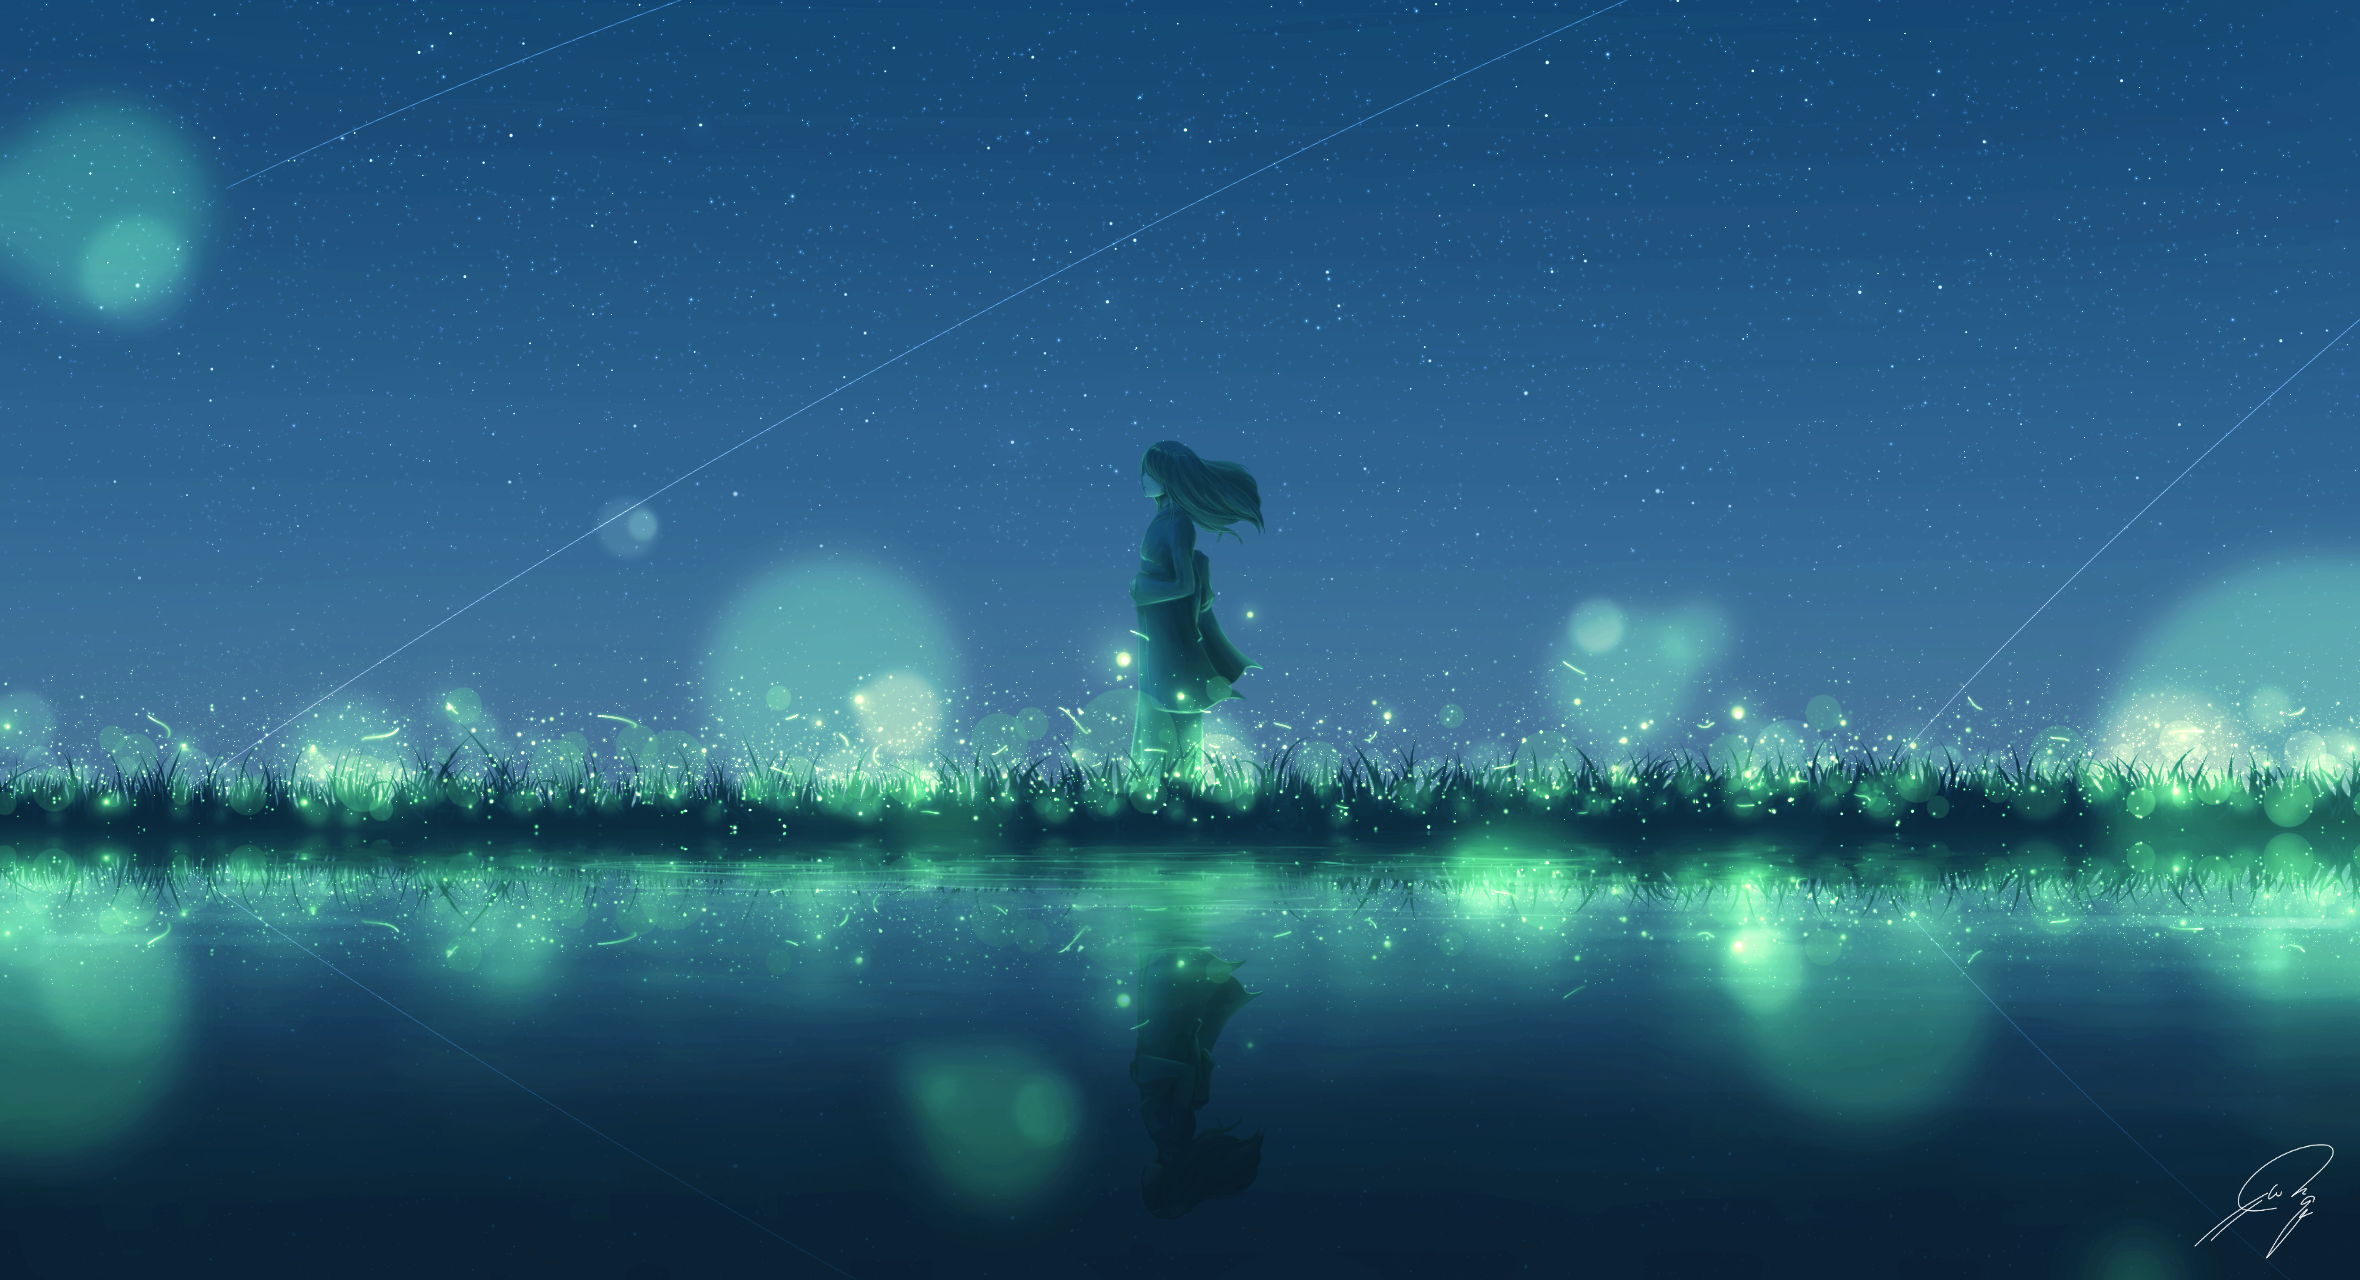 General 2360x1280 Nengoro digital art artwork illustration reflection sky night stars fireflies simple background minimalism